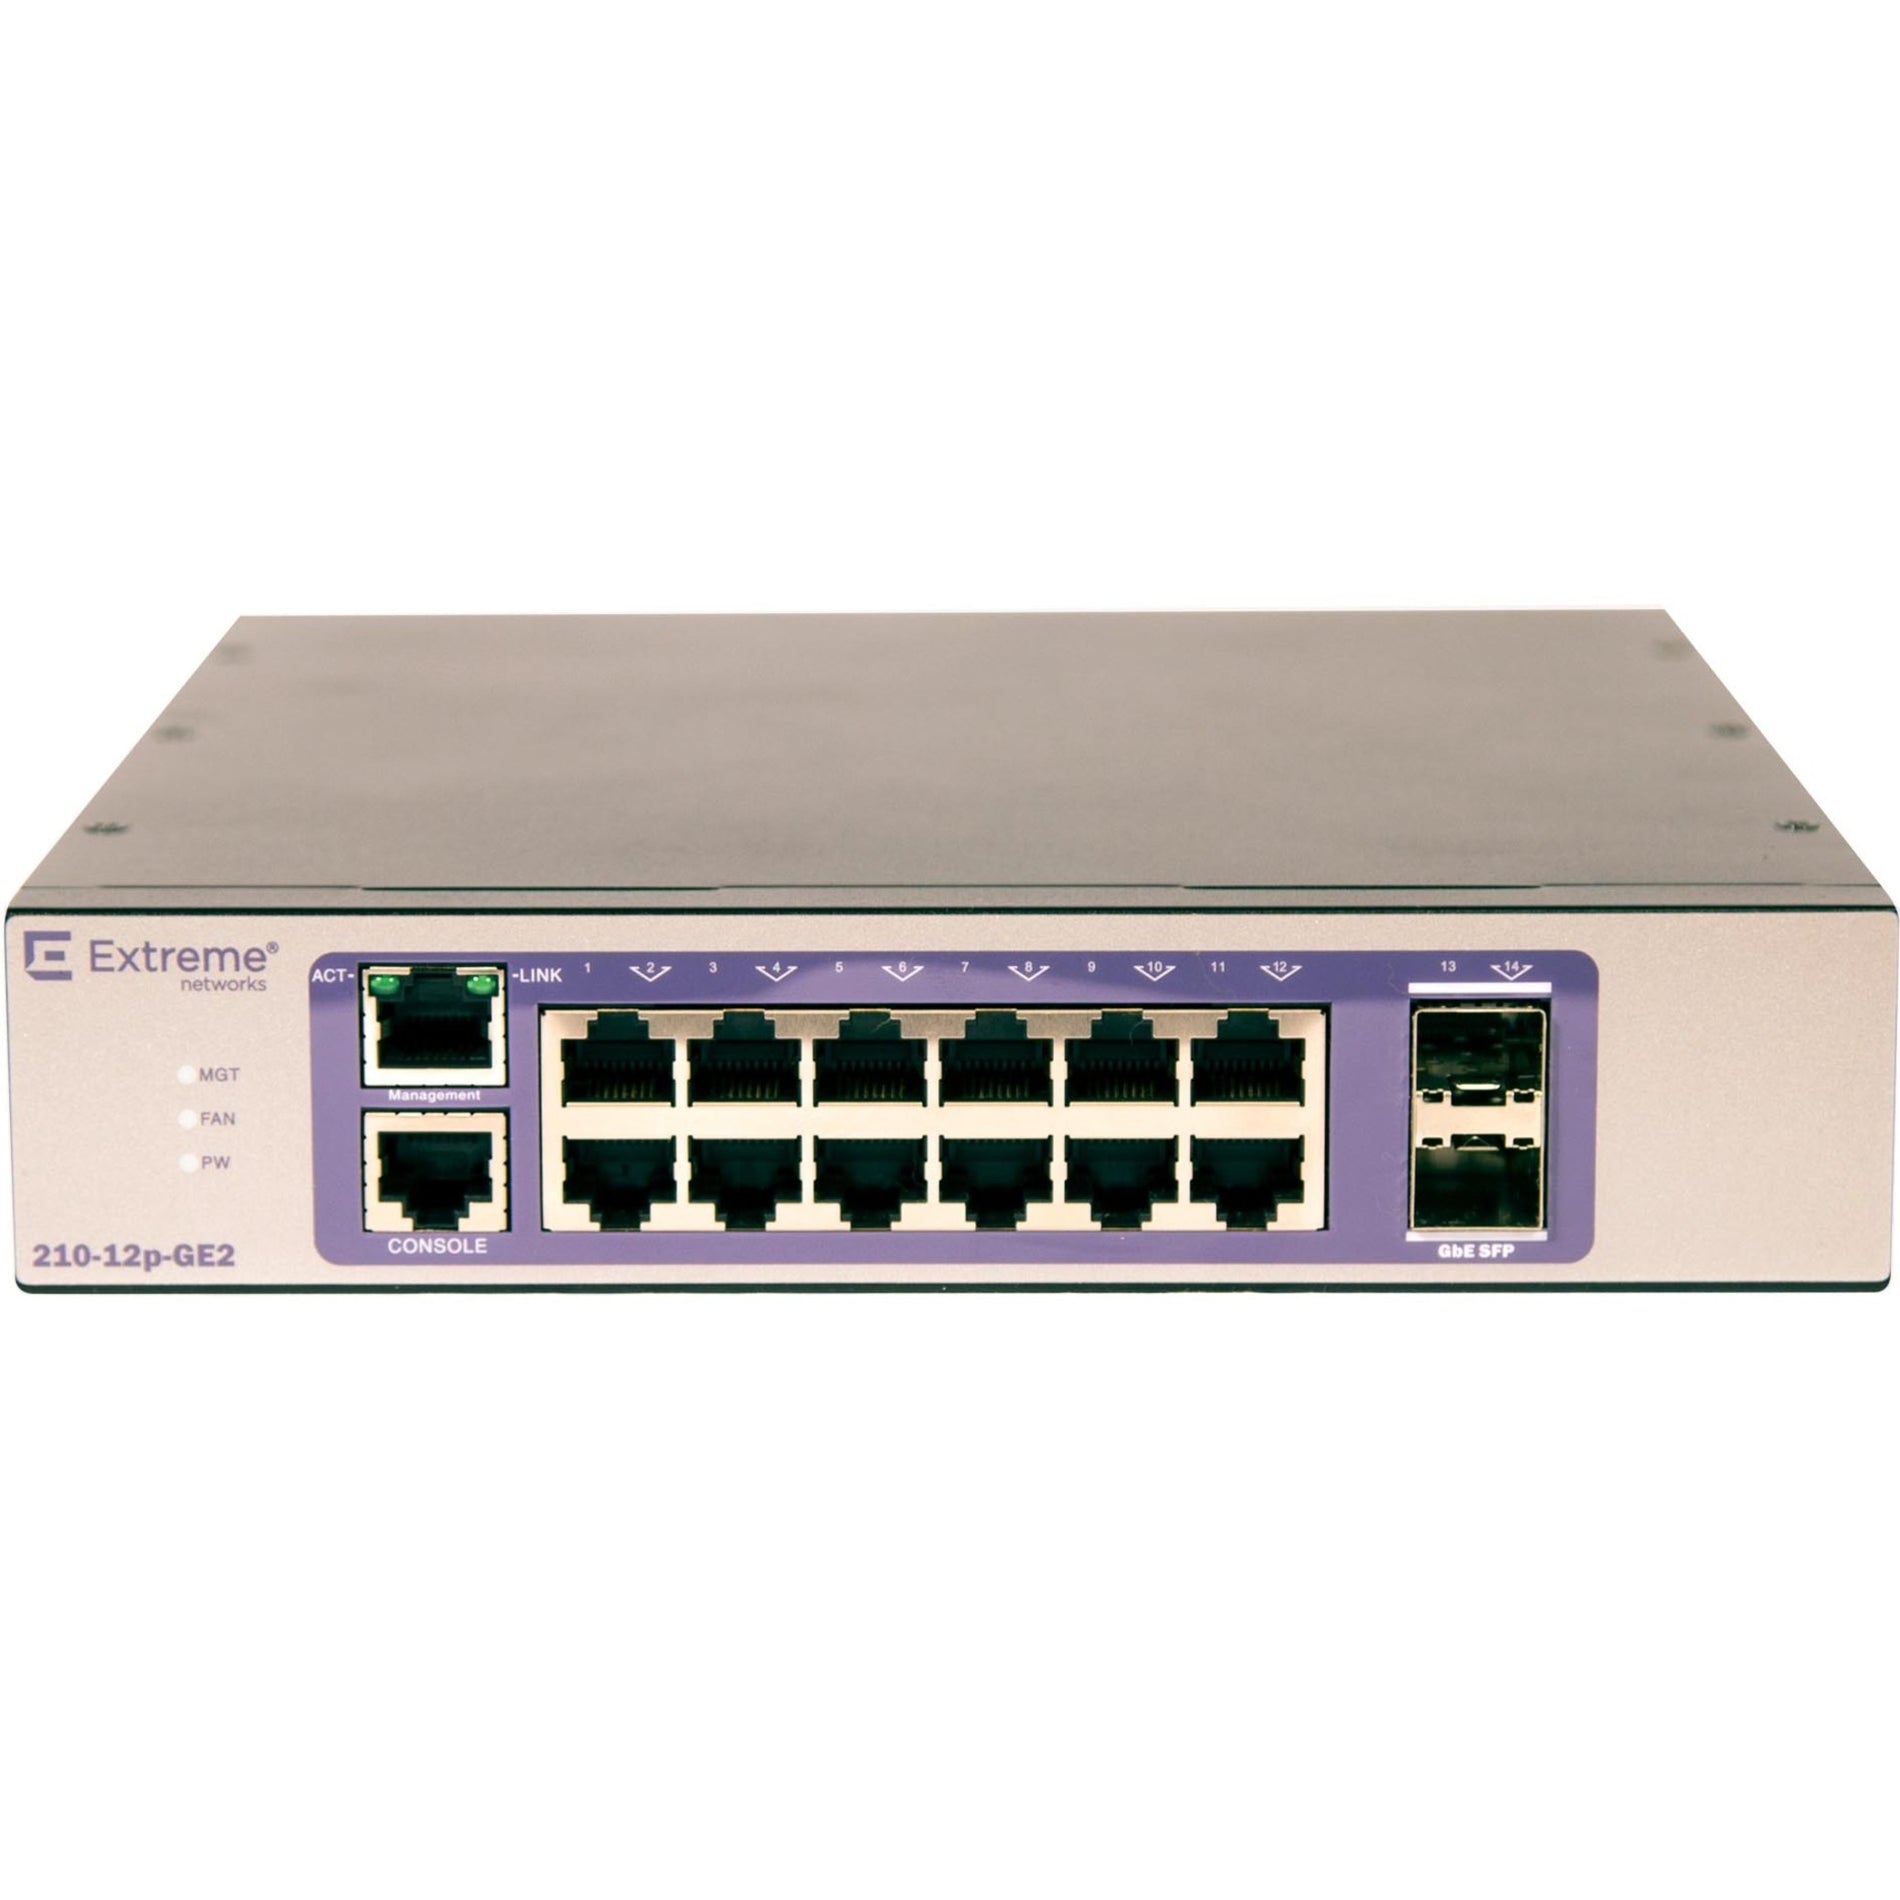 Extreme Networks 16567 210-12p-GE2 Ethernet Switch, Gigabit Ethernet, 12 Network Ports, Lifetime Warranty